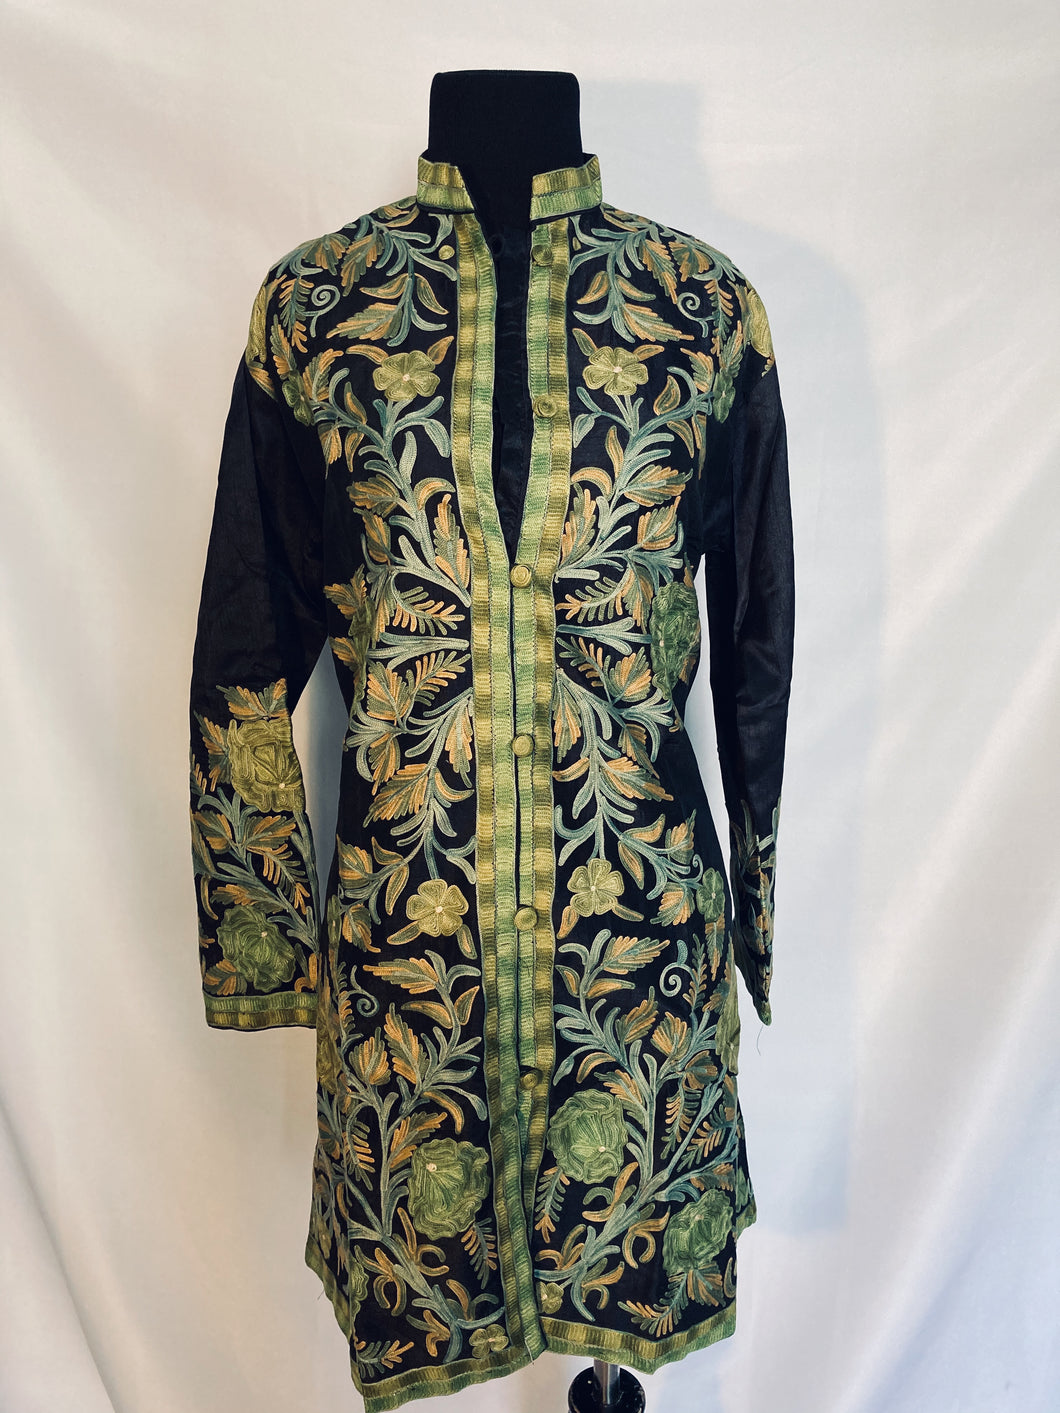 New Black Kashmiri Ari embroidered silk jacket (Green flowers)